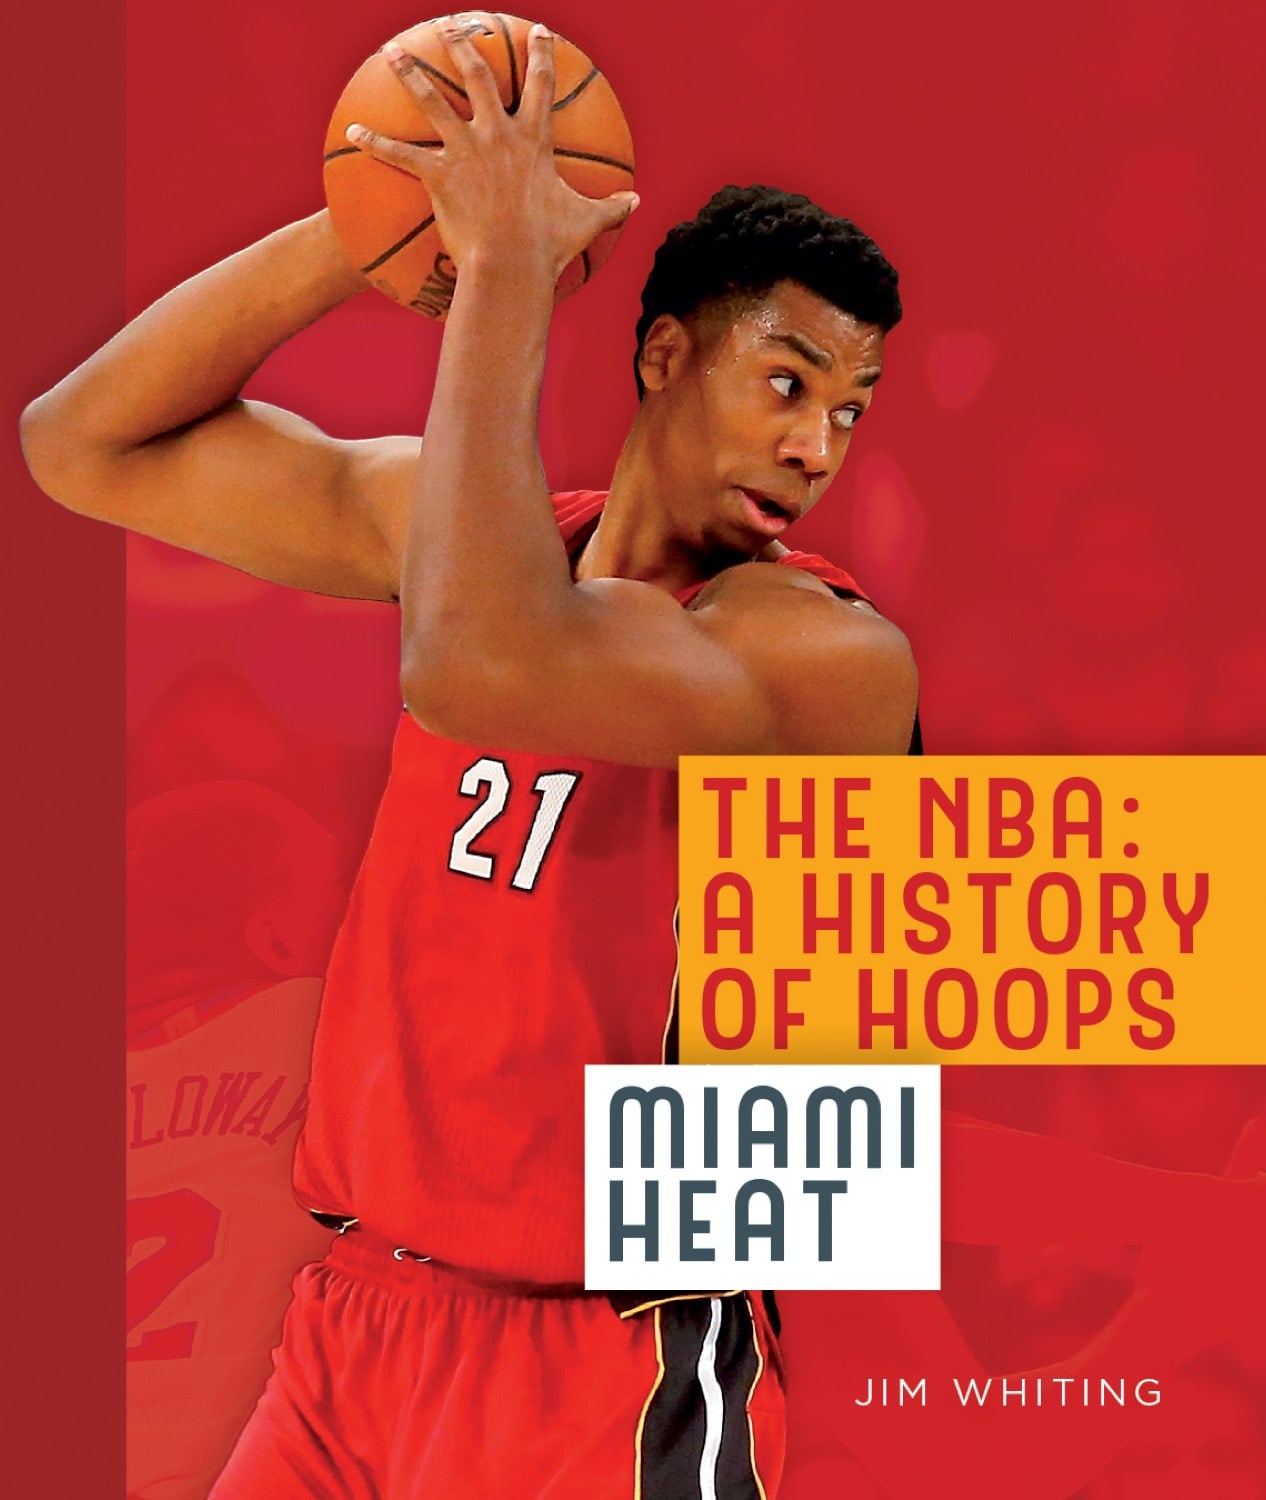 The NBA: A History of Hoops: Miami Heat